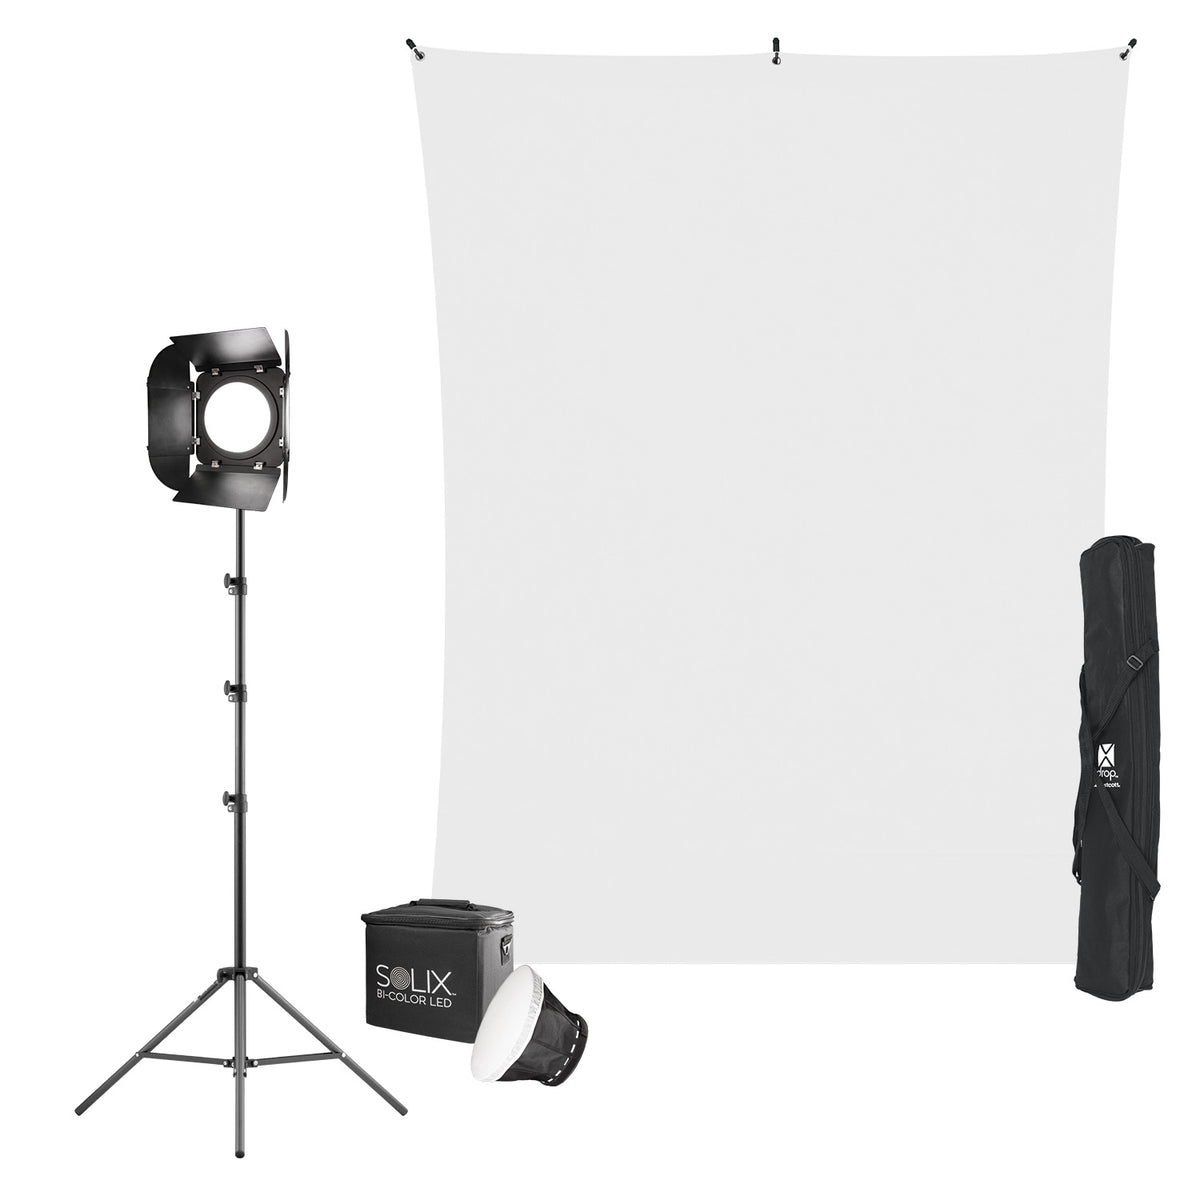 Solix Bi-Color Kit with X-Drop Backdrop & Stands